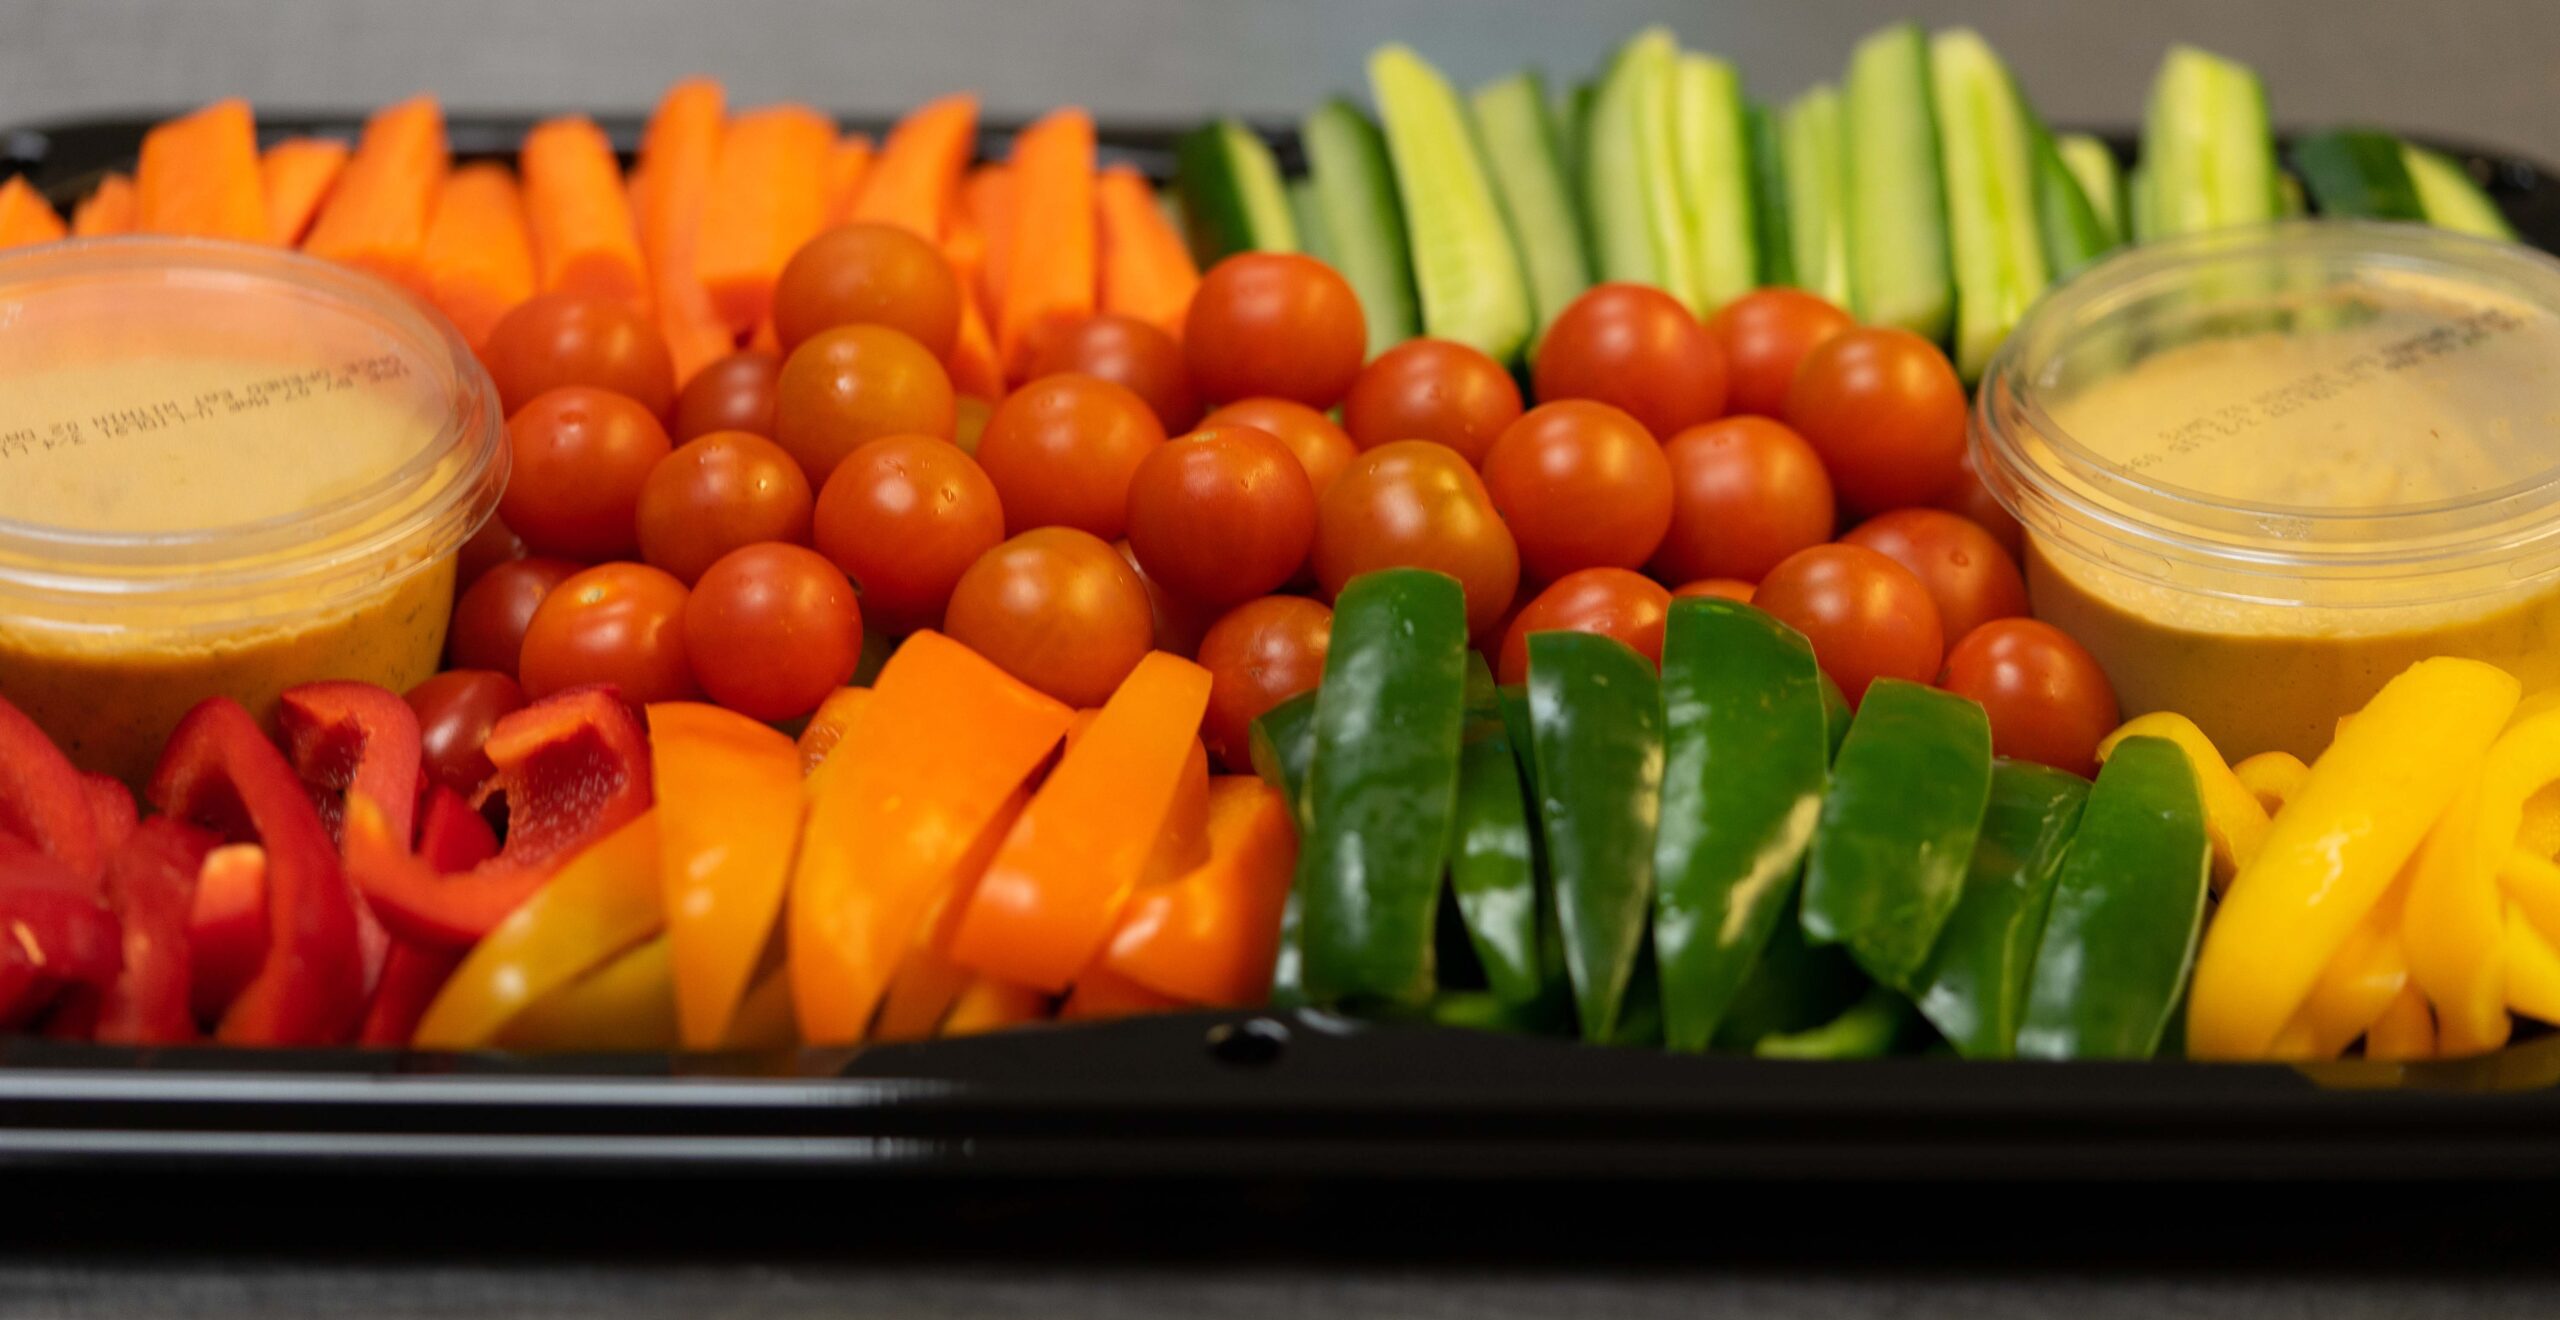 Assortment of fruit and vegetable platter